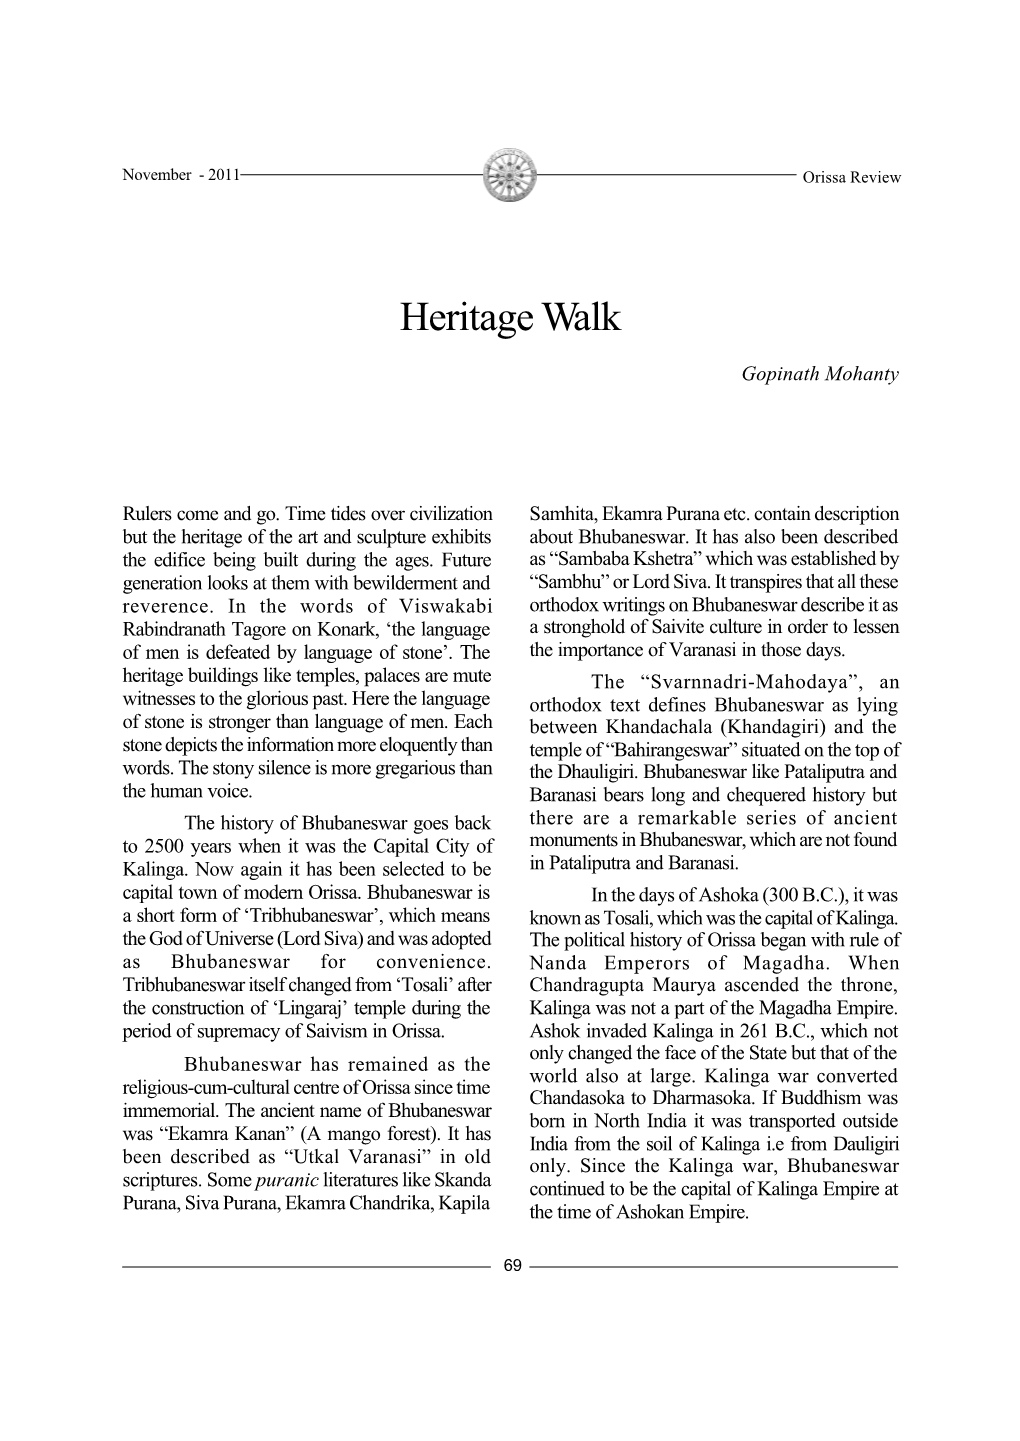 Heritage Walk